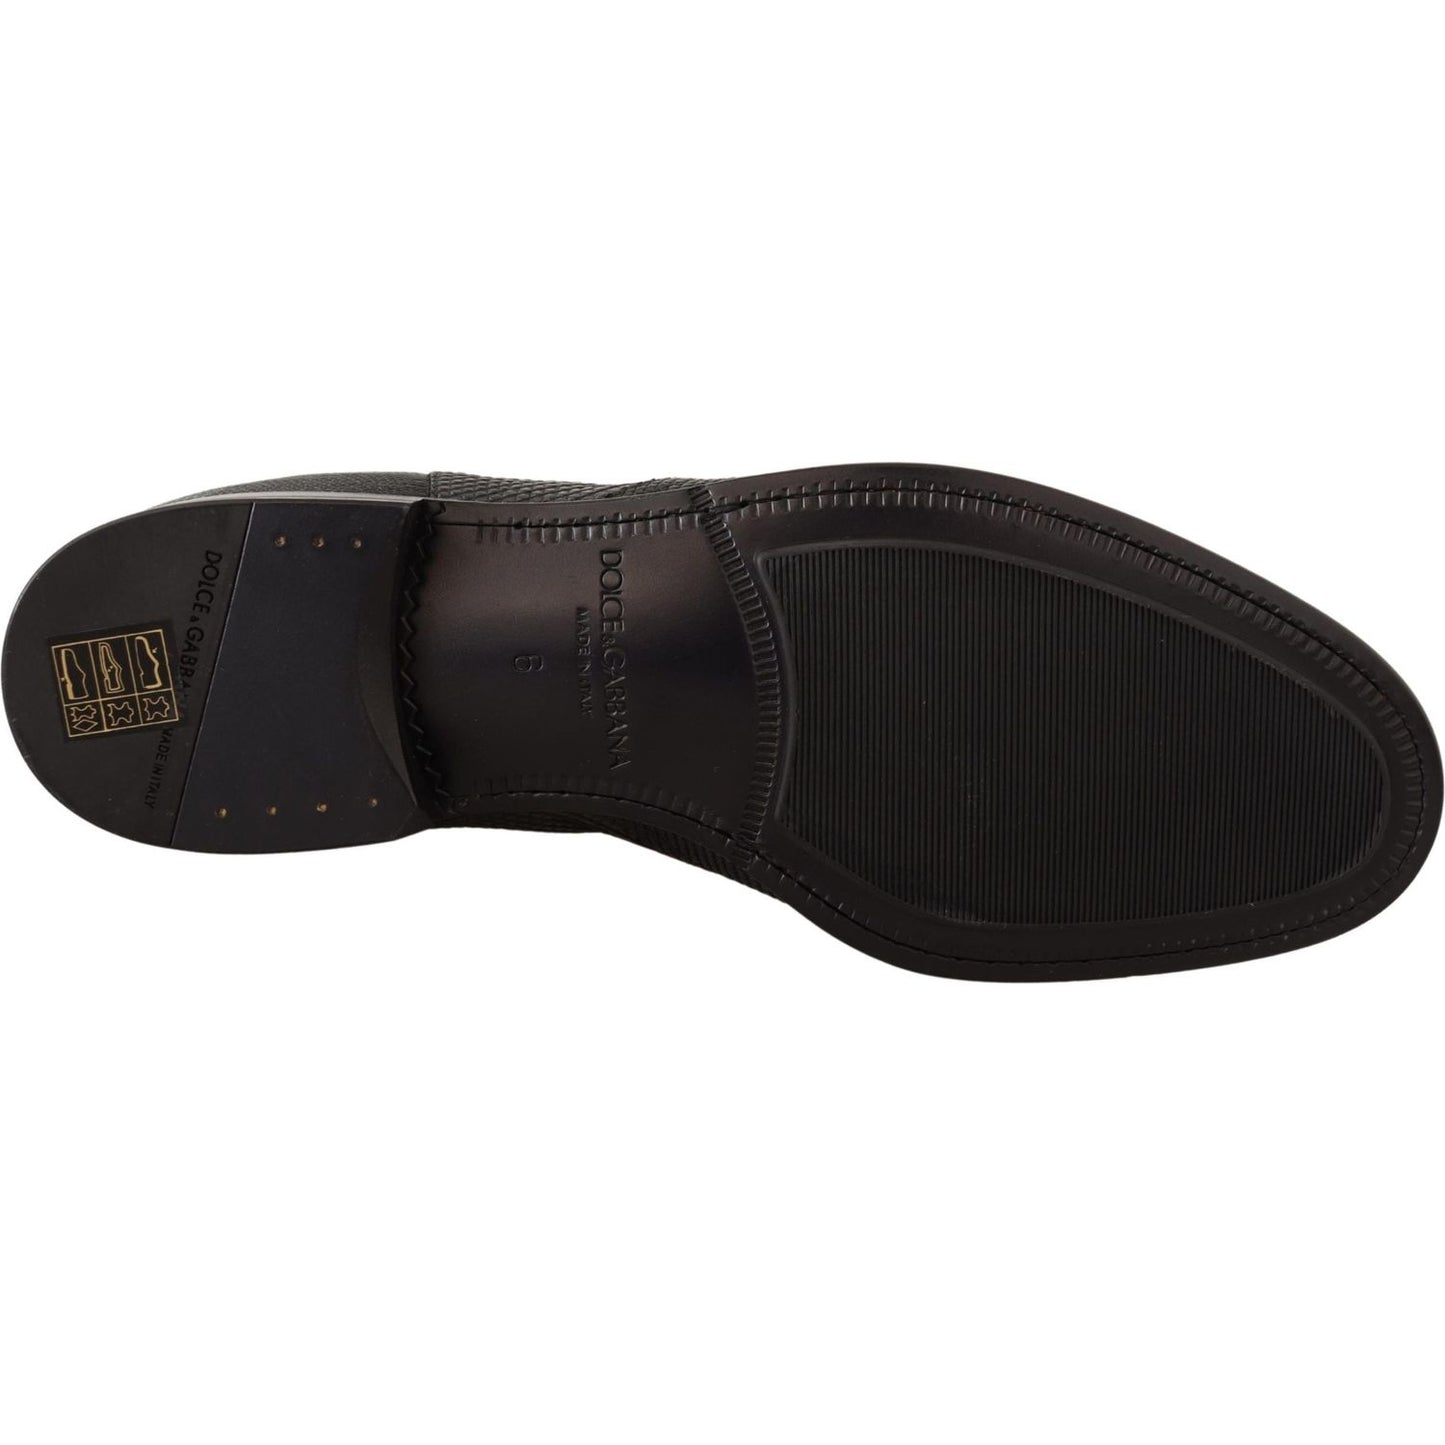 Dolce & Gabbana Elegant Black Leather Lizard Skin Derby Boots MAN BOOTS black-leather-lizard-skin-ankle-boots